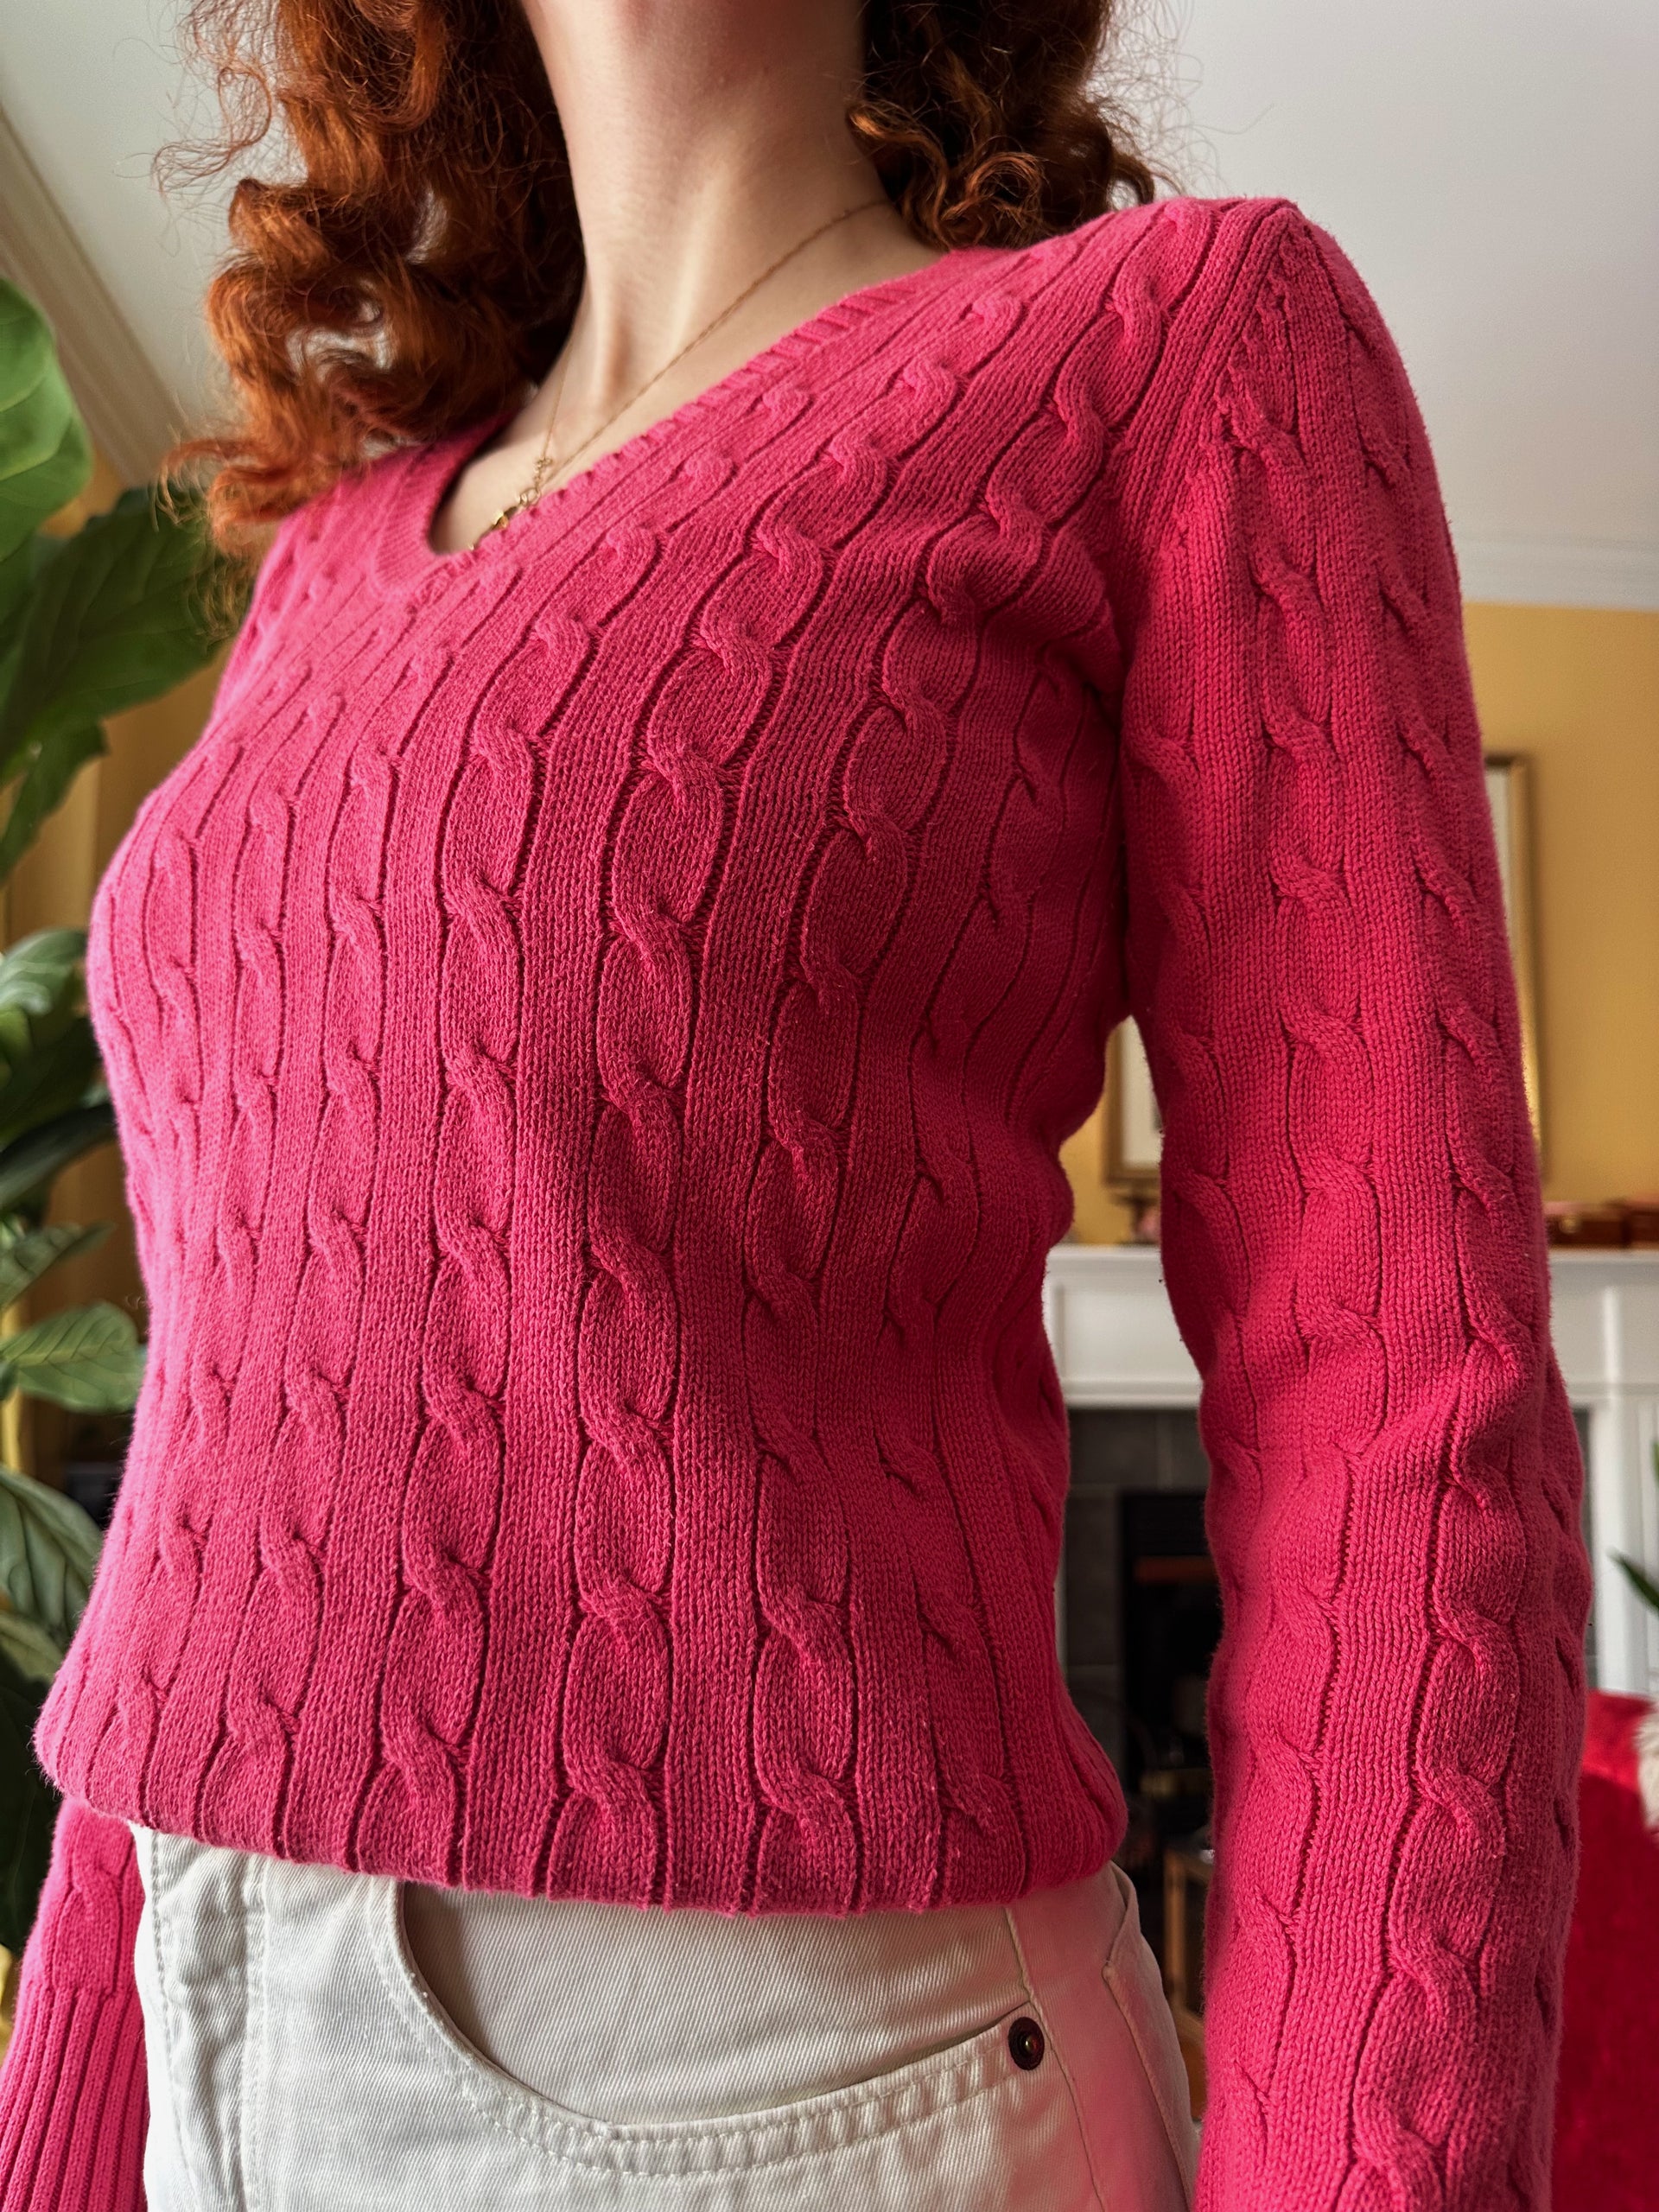 Quartz Pink Cable Knit Tights – Tweedle Beedle